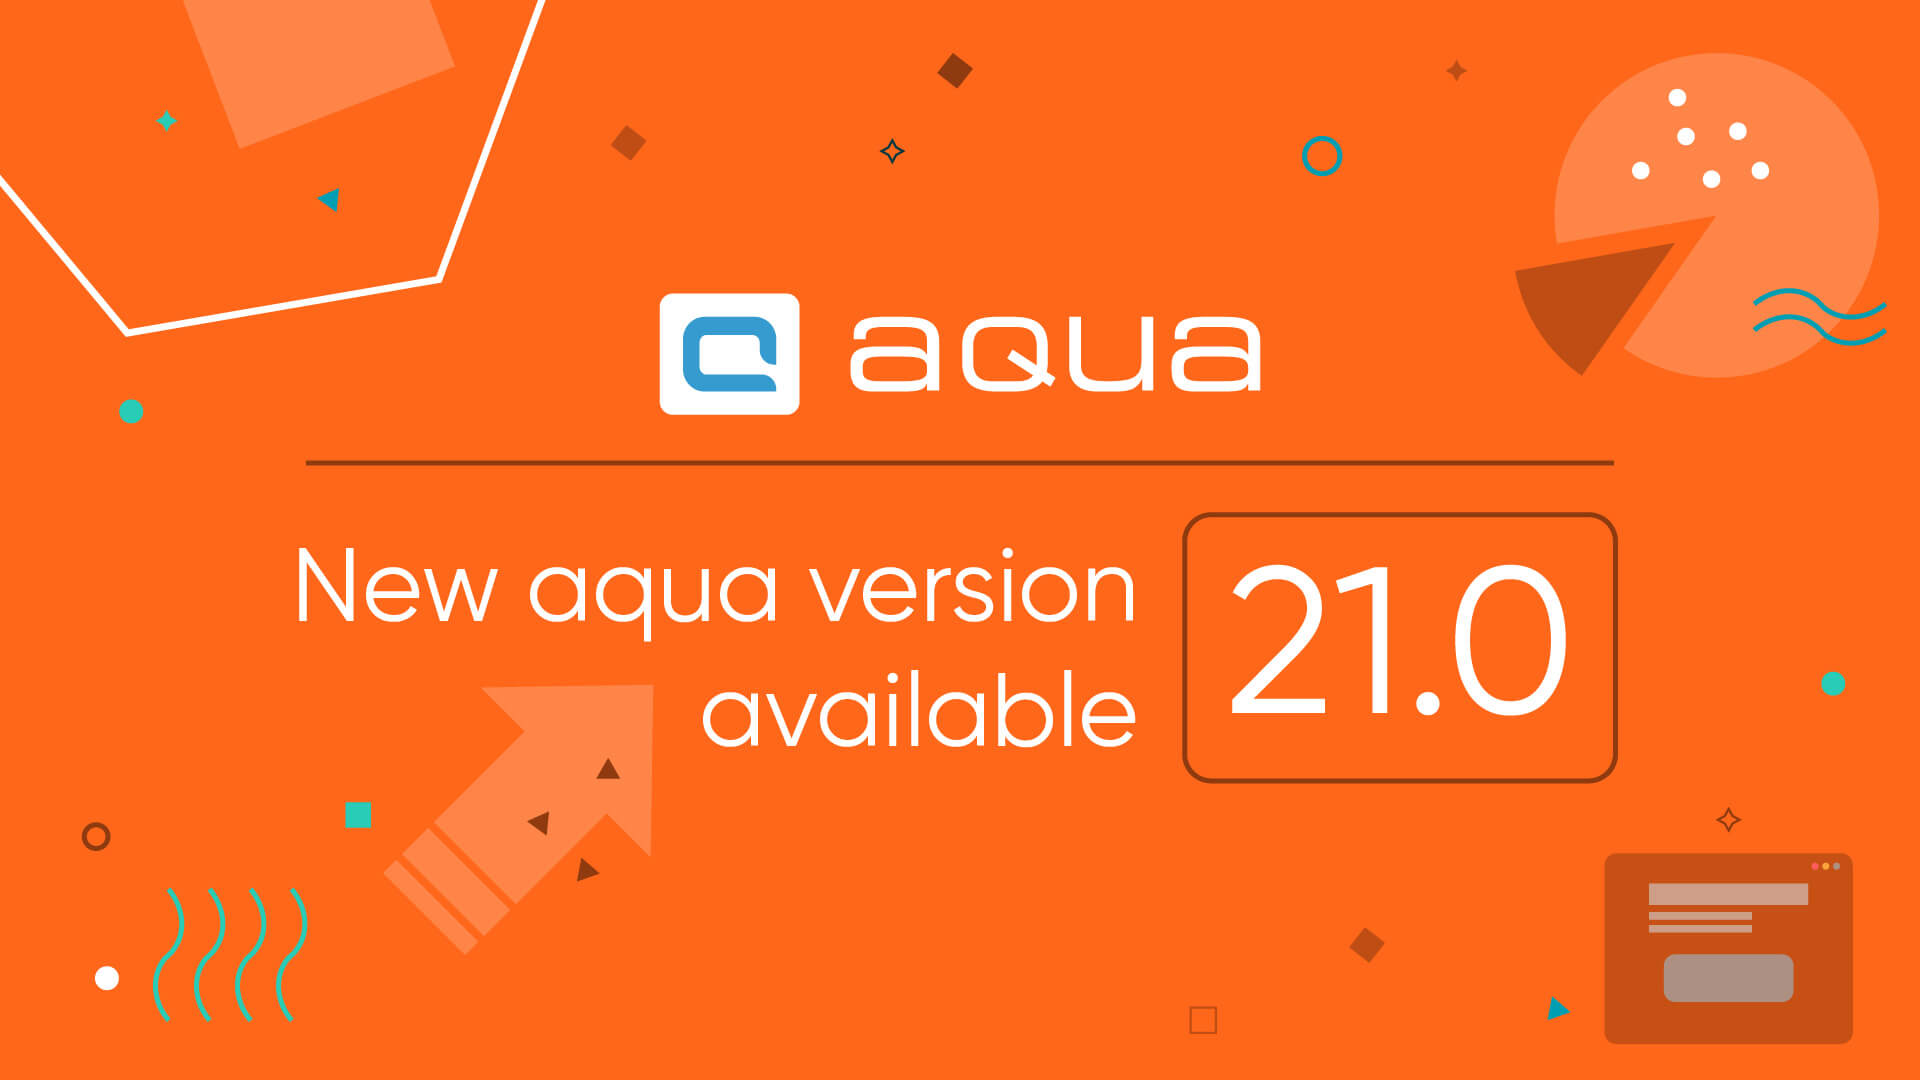 New aqua version 21.0 available